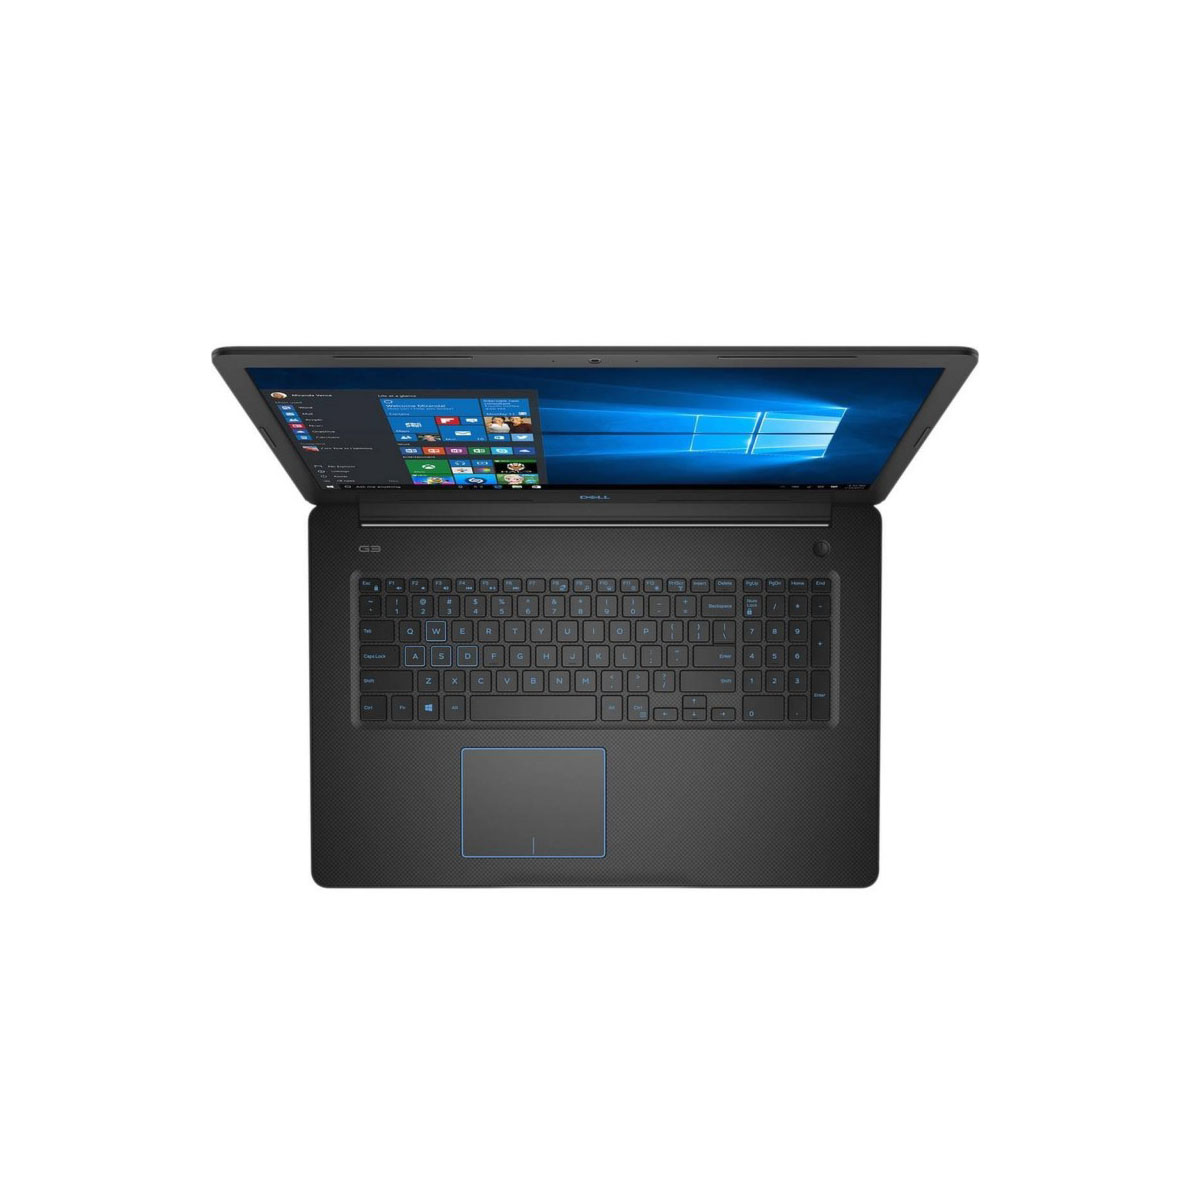 2019 Acer Nitro 5 15.6 FHD Gaming Laptop - Quad-core Intel i5-8300H, 16GB  DDR4, NVIDIA GeForce GTX 1050 Ti with 4GB GDDR5, 256GB PCIe SSD, 1TB HDD